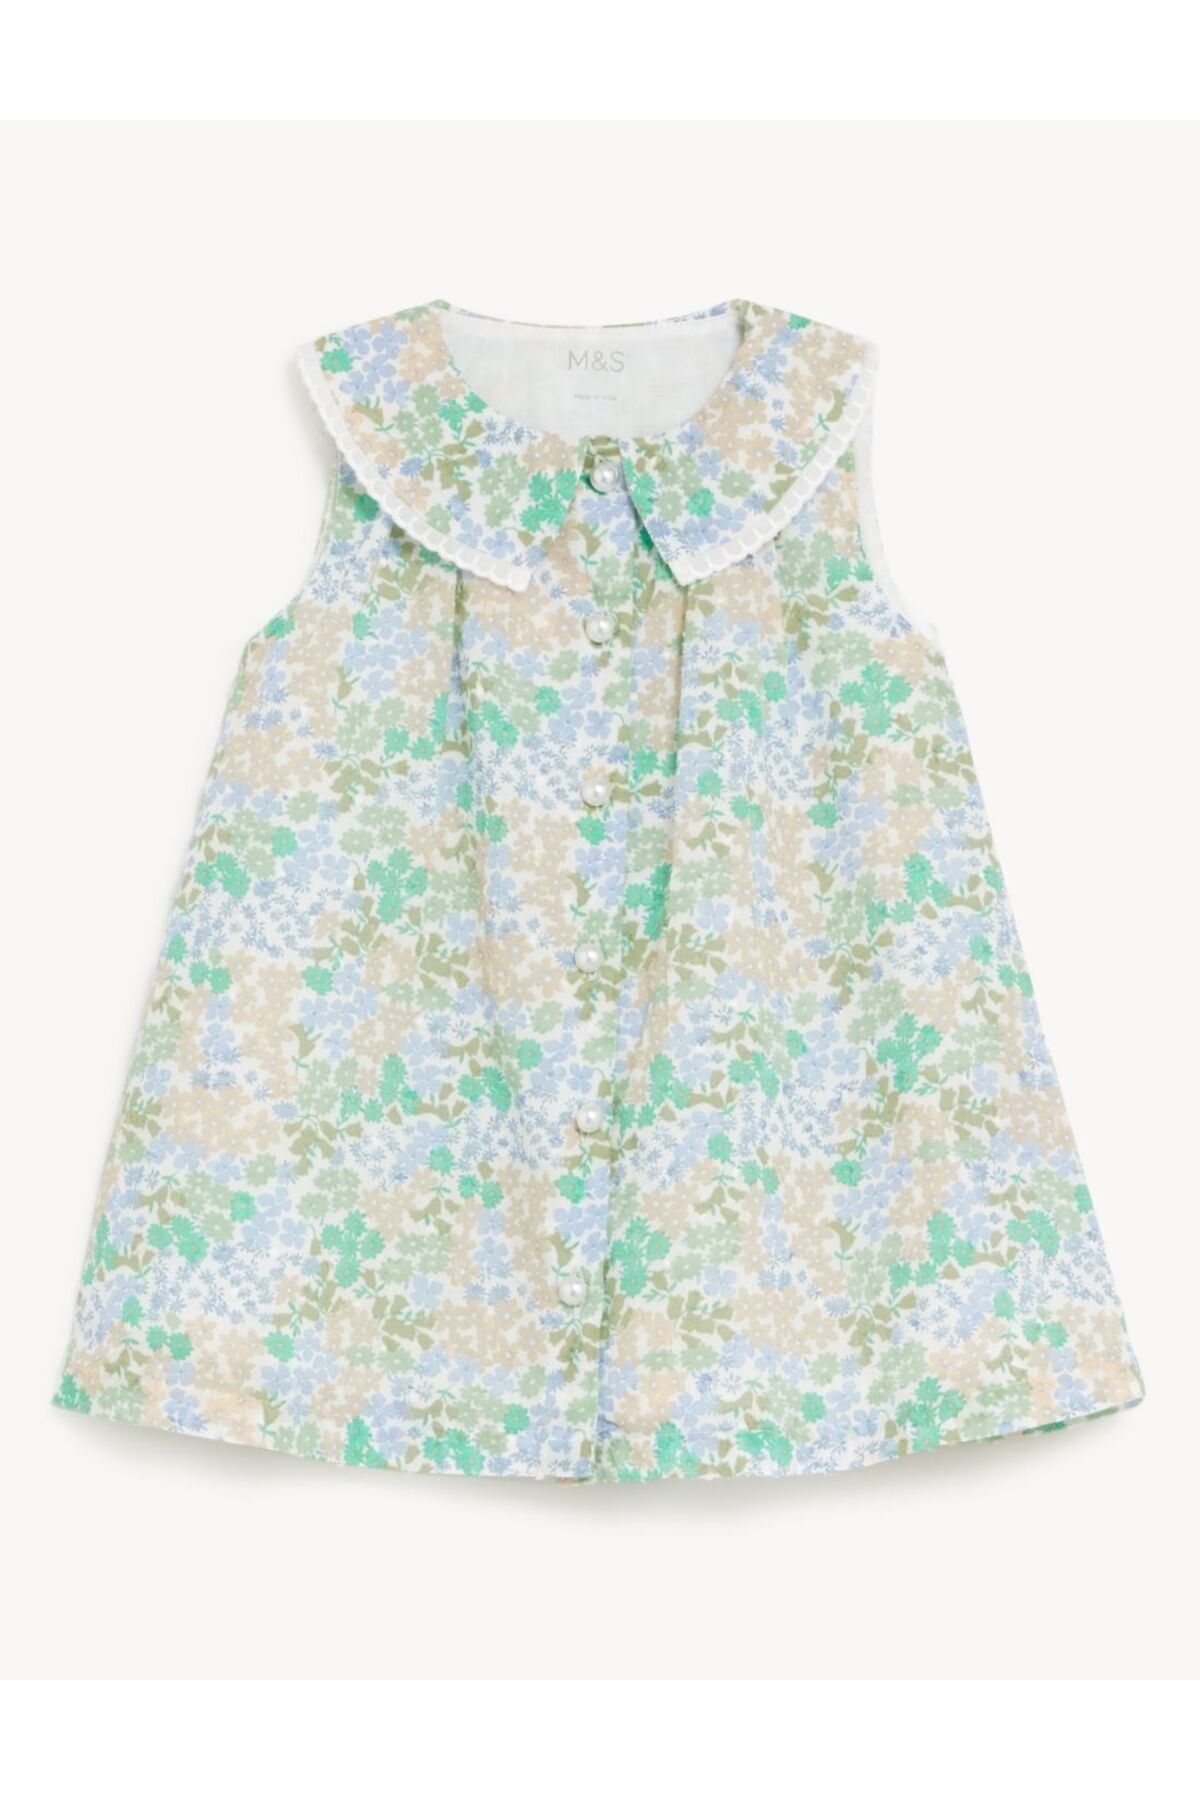 Marks & Spencer Saf Pamuklu Çiçek Desenli Elbise (0-3 Yaş)